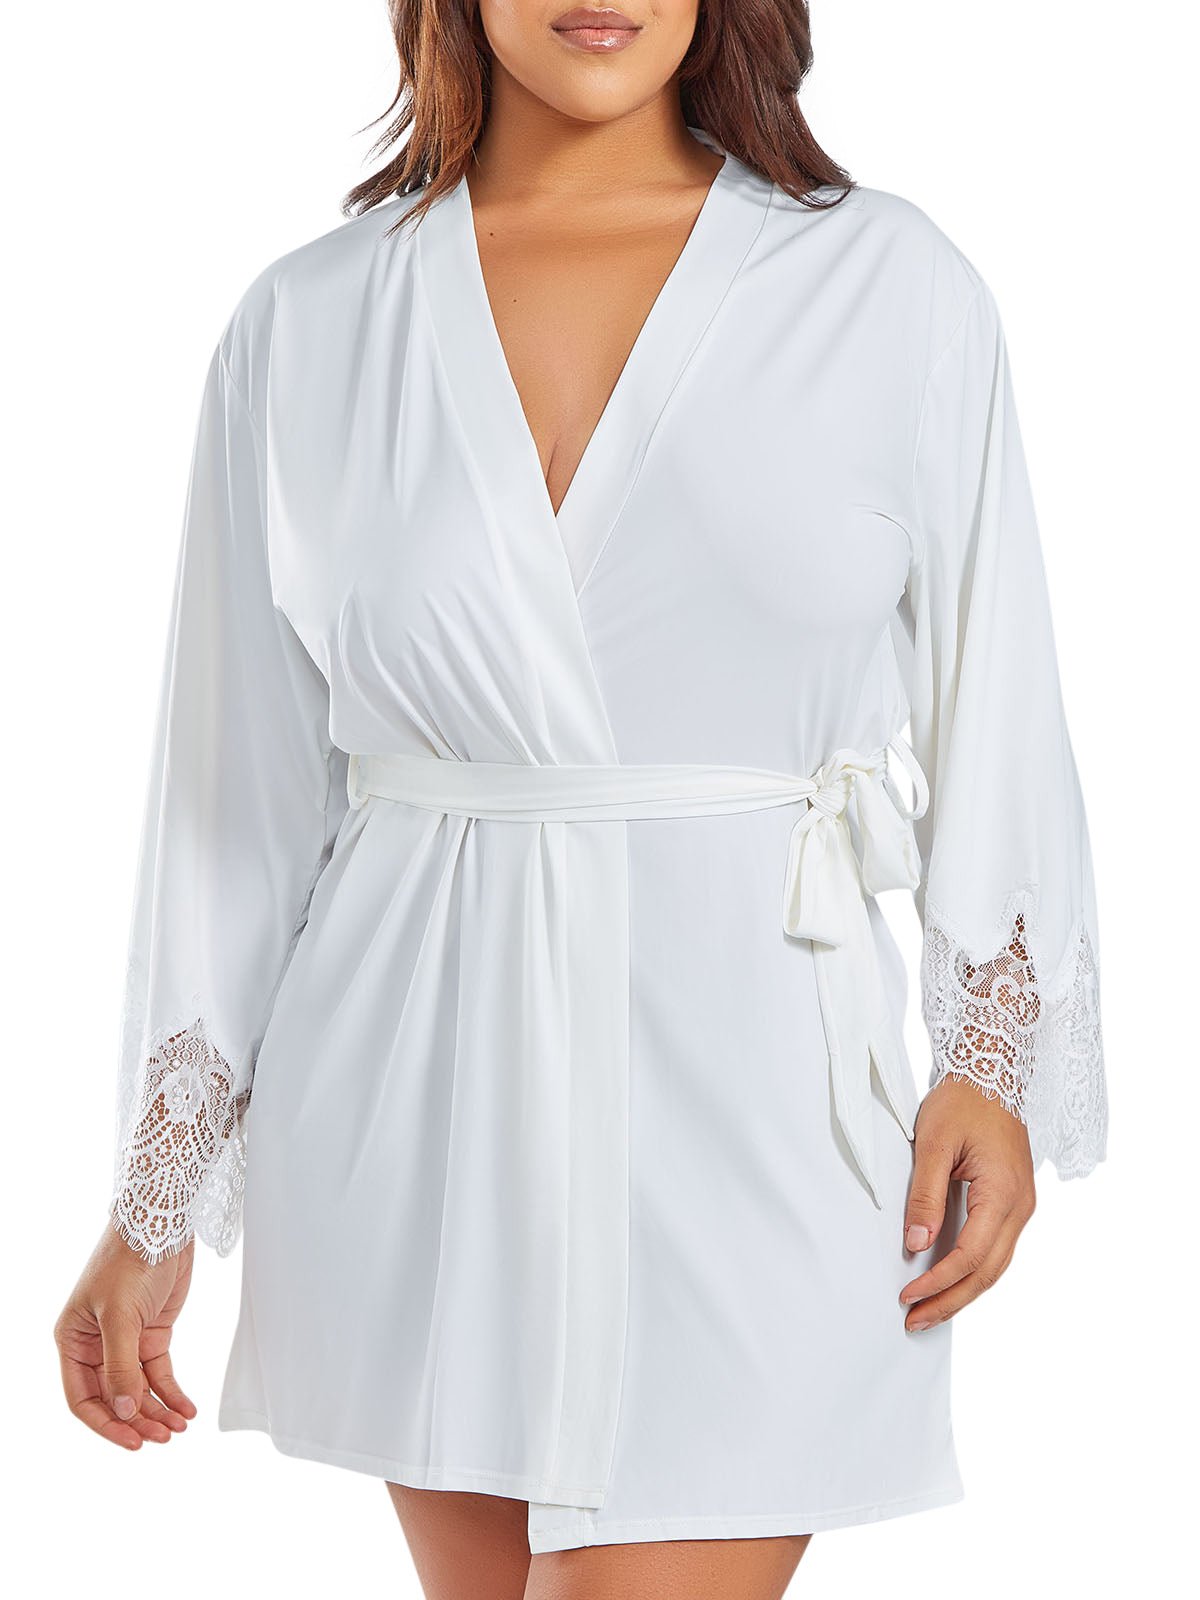 iCollection Robe Women&#39;s Arlene Plus Size Robe Loungewear